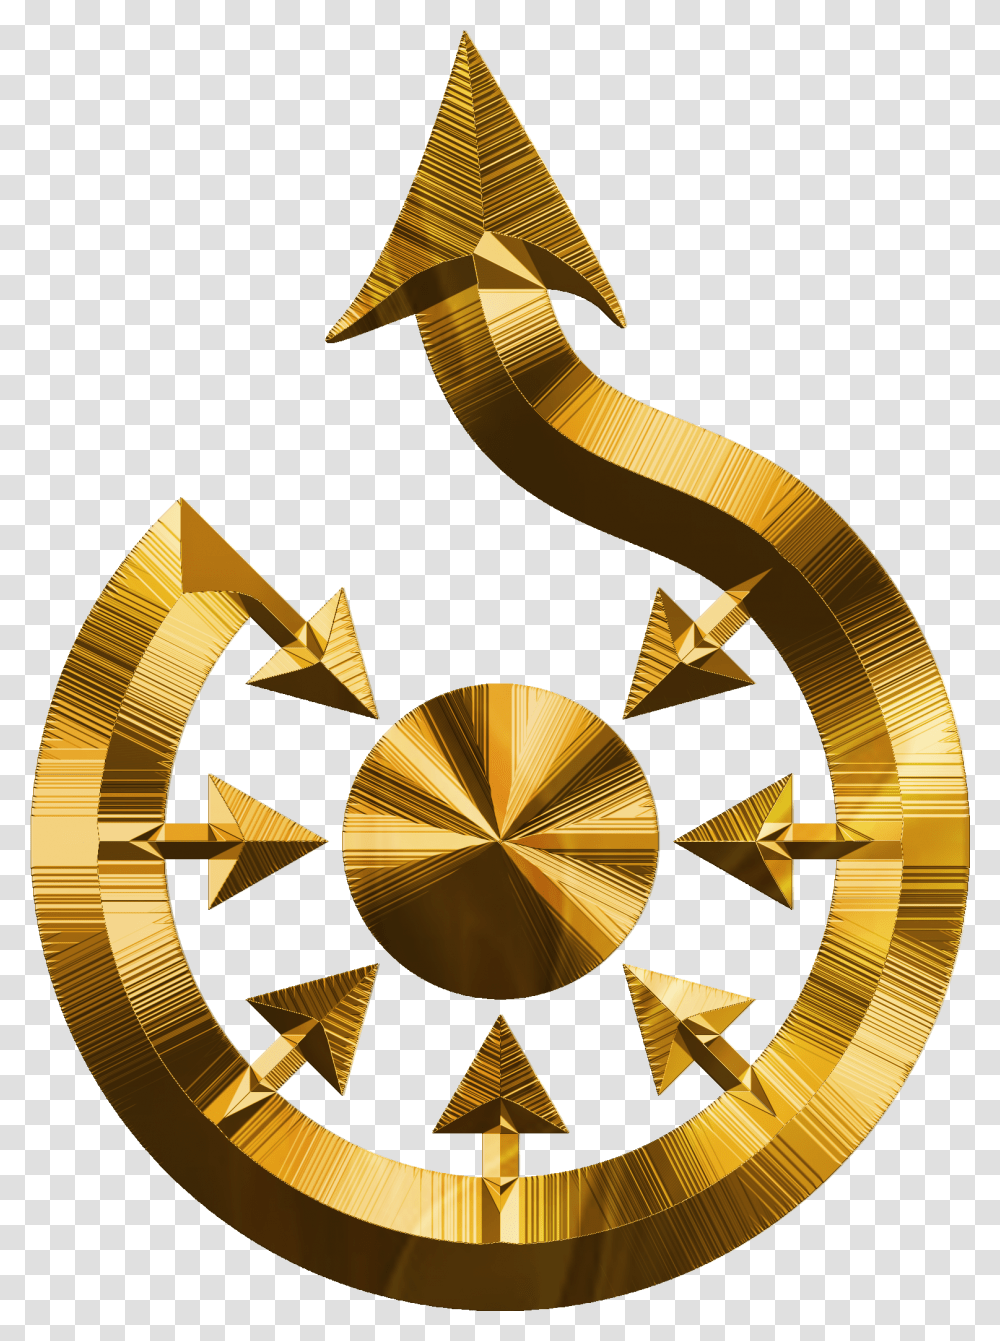 Commons Logo Emas, Gold, Chandelier, Lamp, Emblem Transparent Png